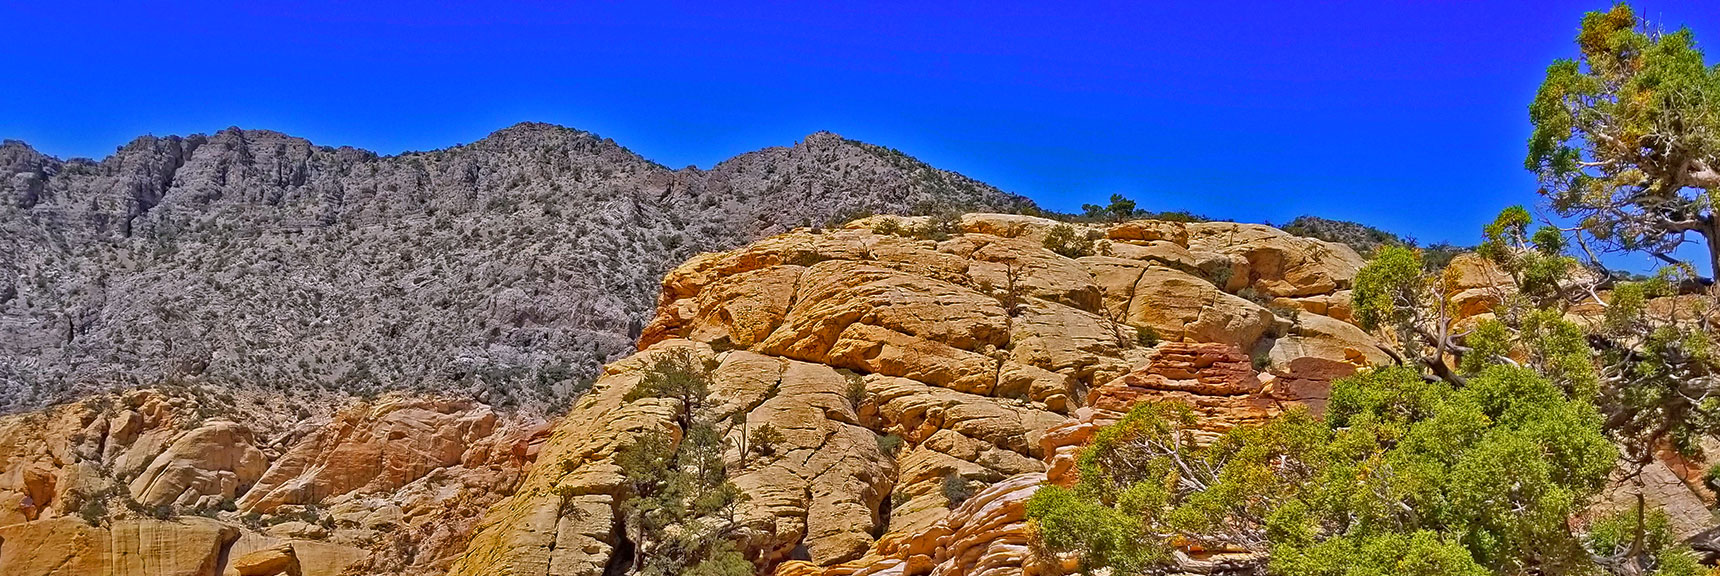 View from Hidden Peak Saddle to High Ridgeline | Rainbow Mountains Upper Crest Ridge, Nevada